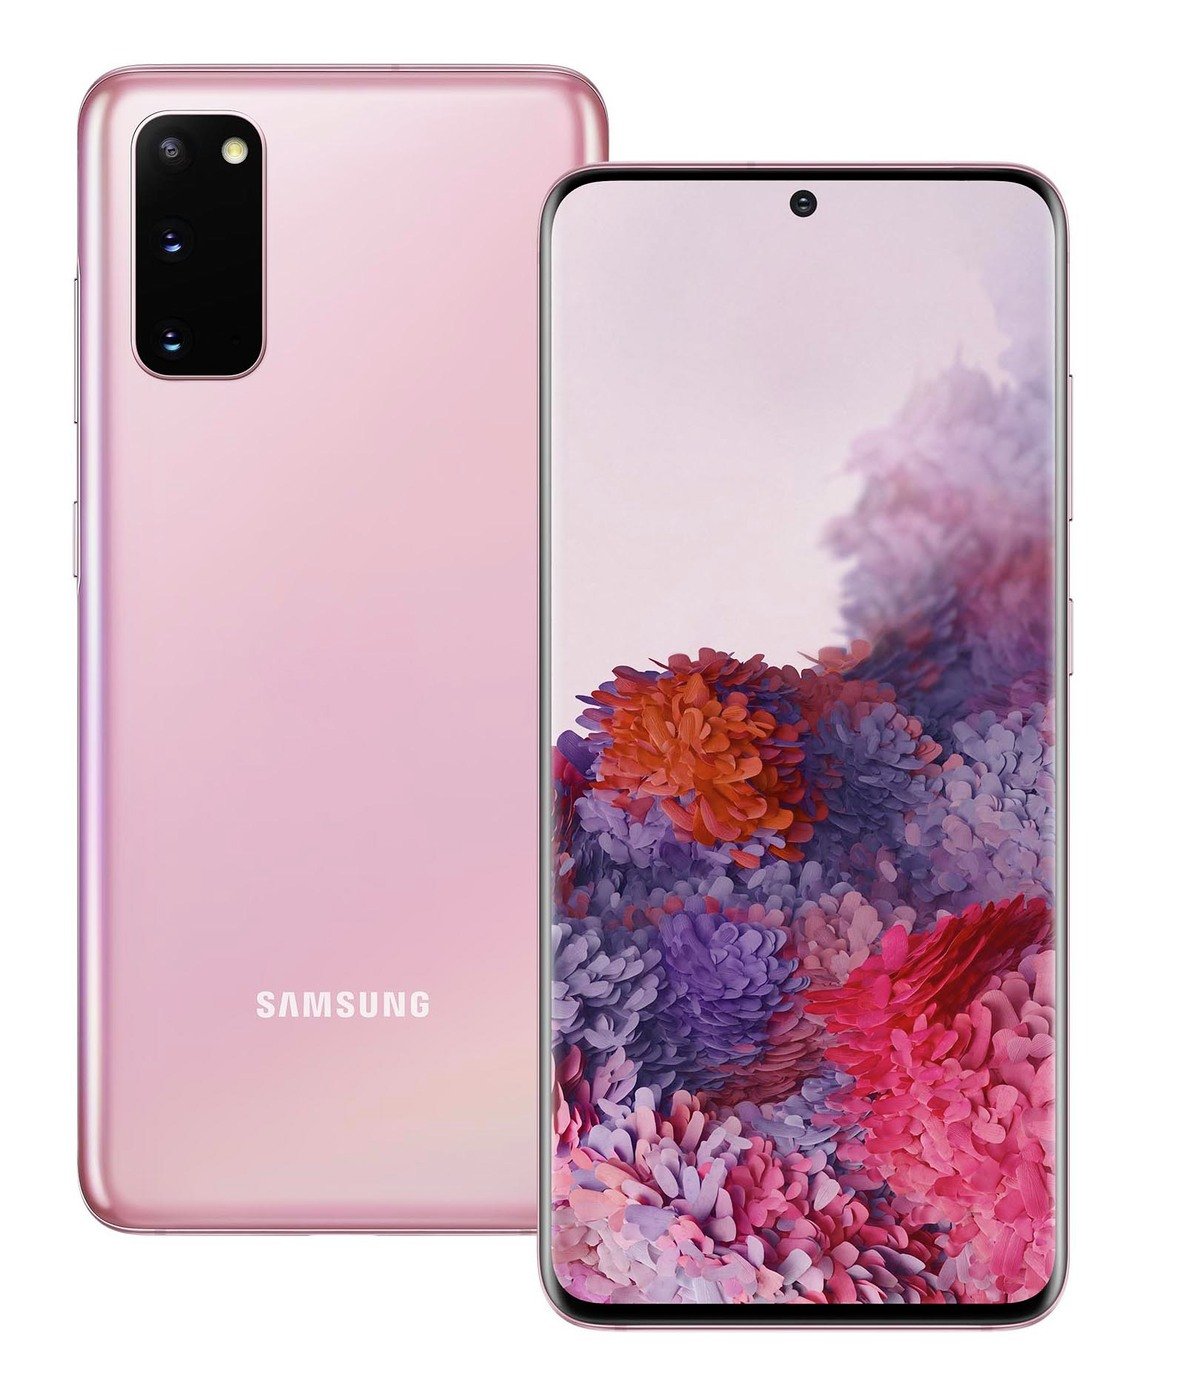 SIM Free Samsung Galaxy S20 128GB 4G Mobile Phone-Cloud Pink Review